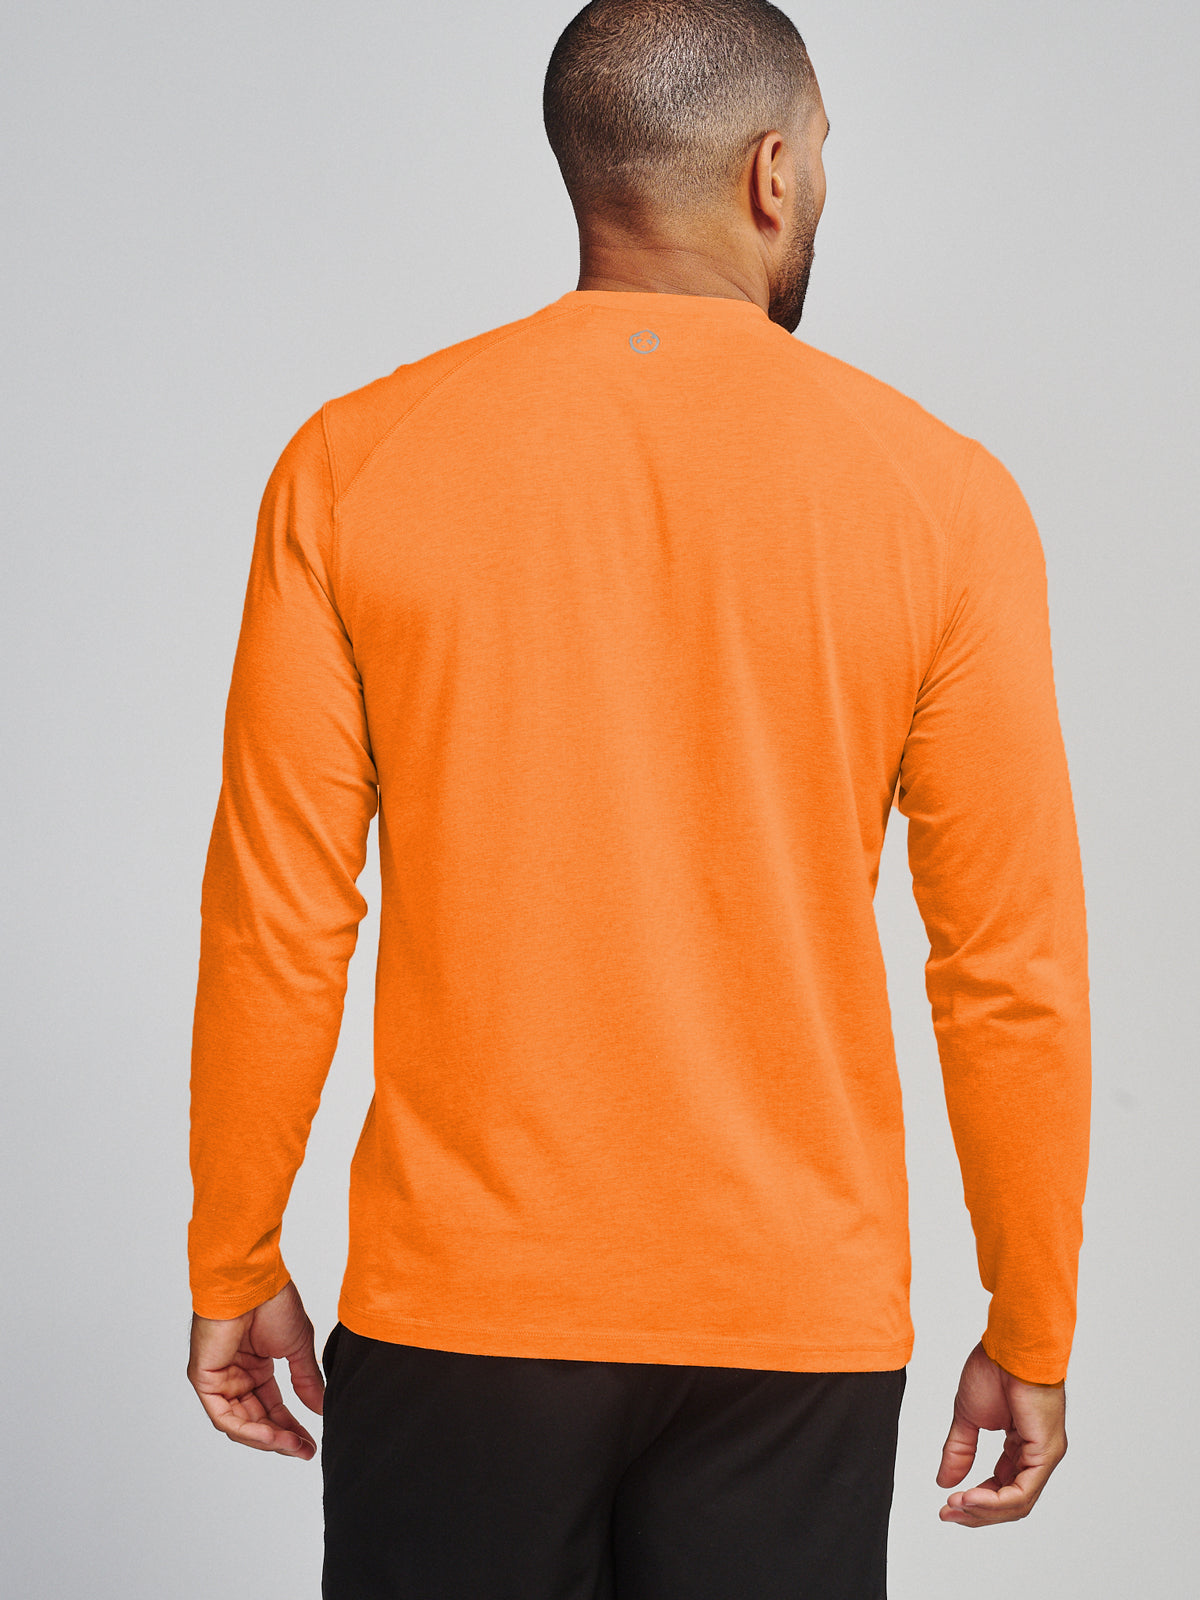 Carrollton Long Sleeve Fitness T-Shirt - Clemson - tasc Performance (OrangeC)